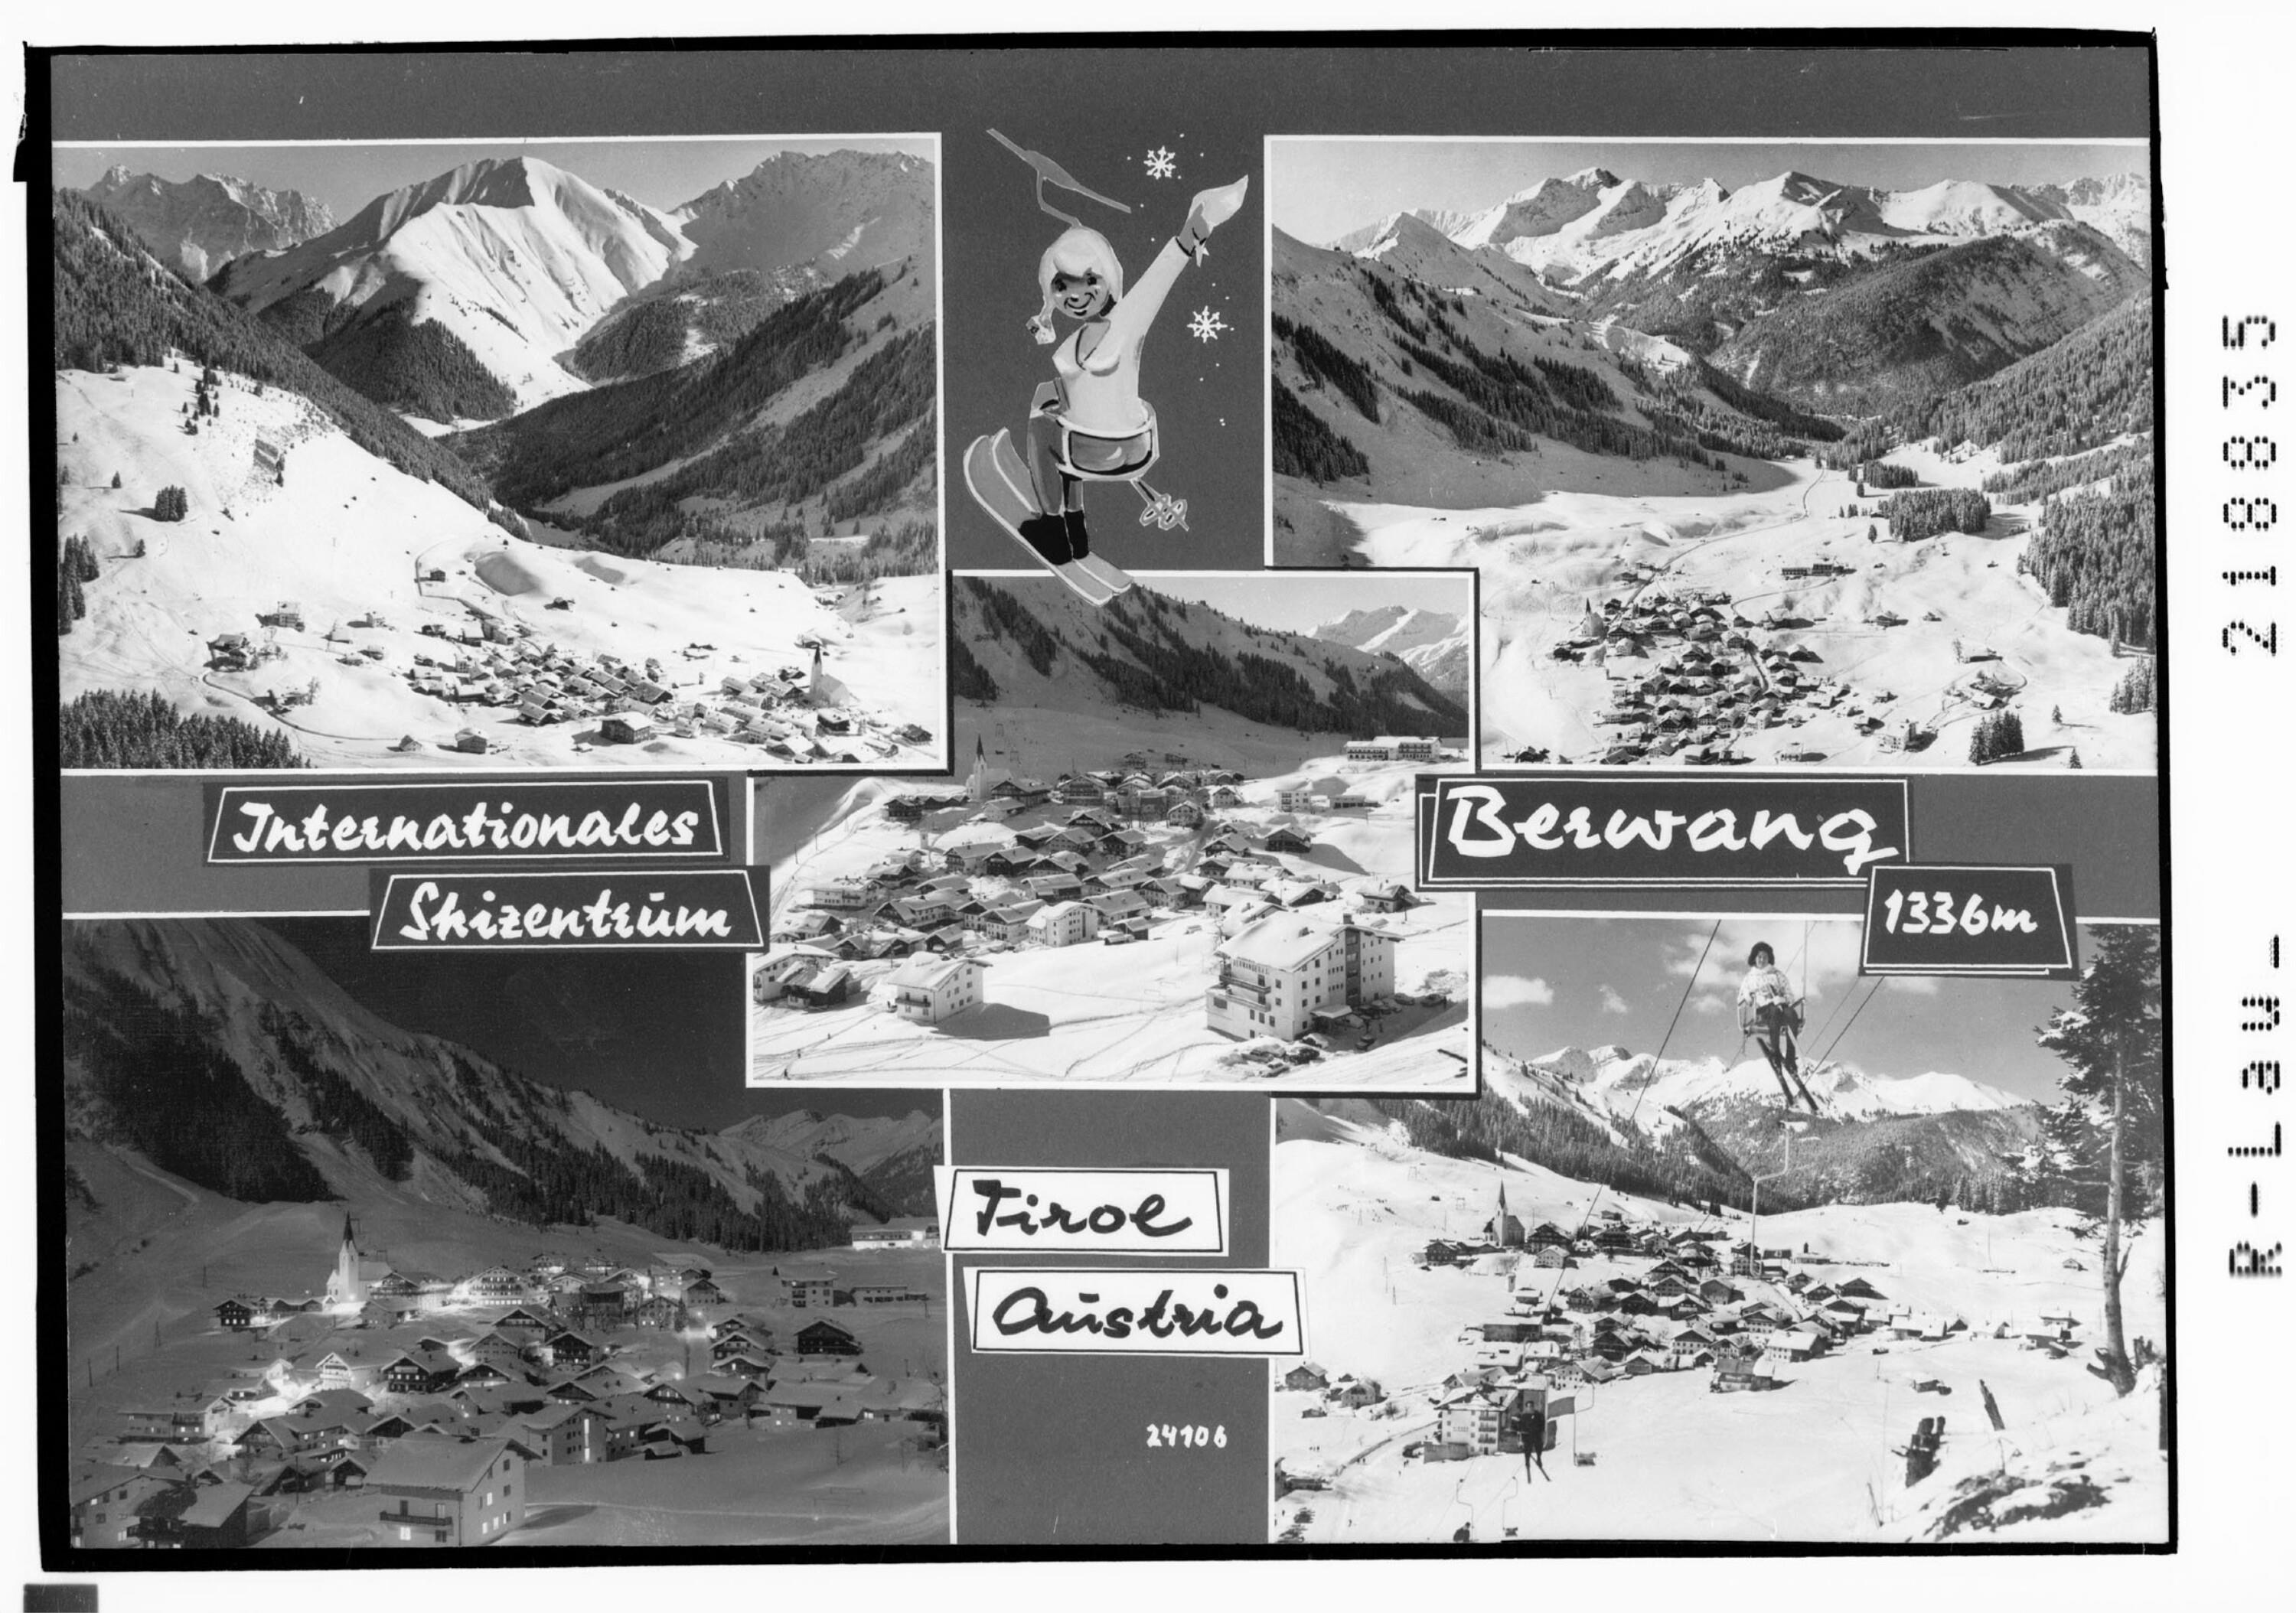 Internationales Skizentrum Berwang 1336 m Tirol Austria></div>


    <hr>
    <div class=